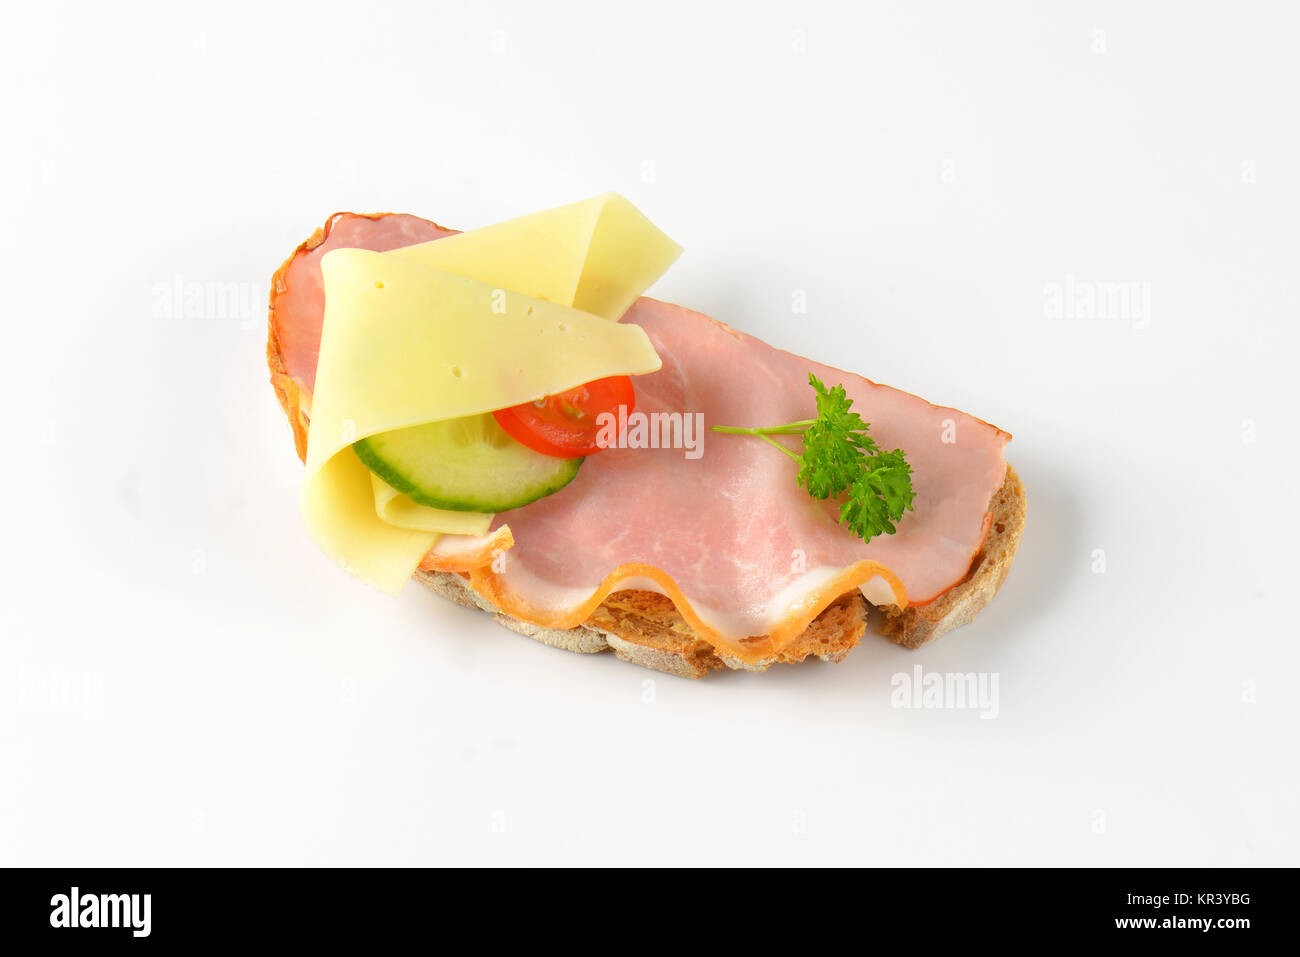 open faced sandwich Stock Photo